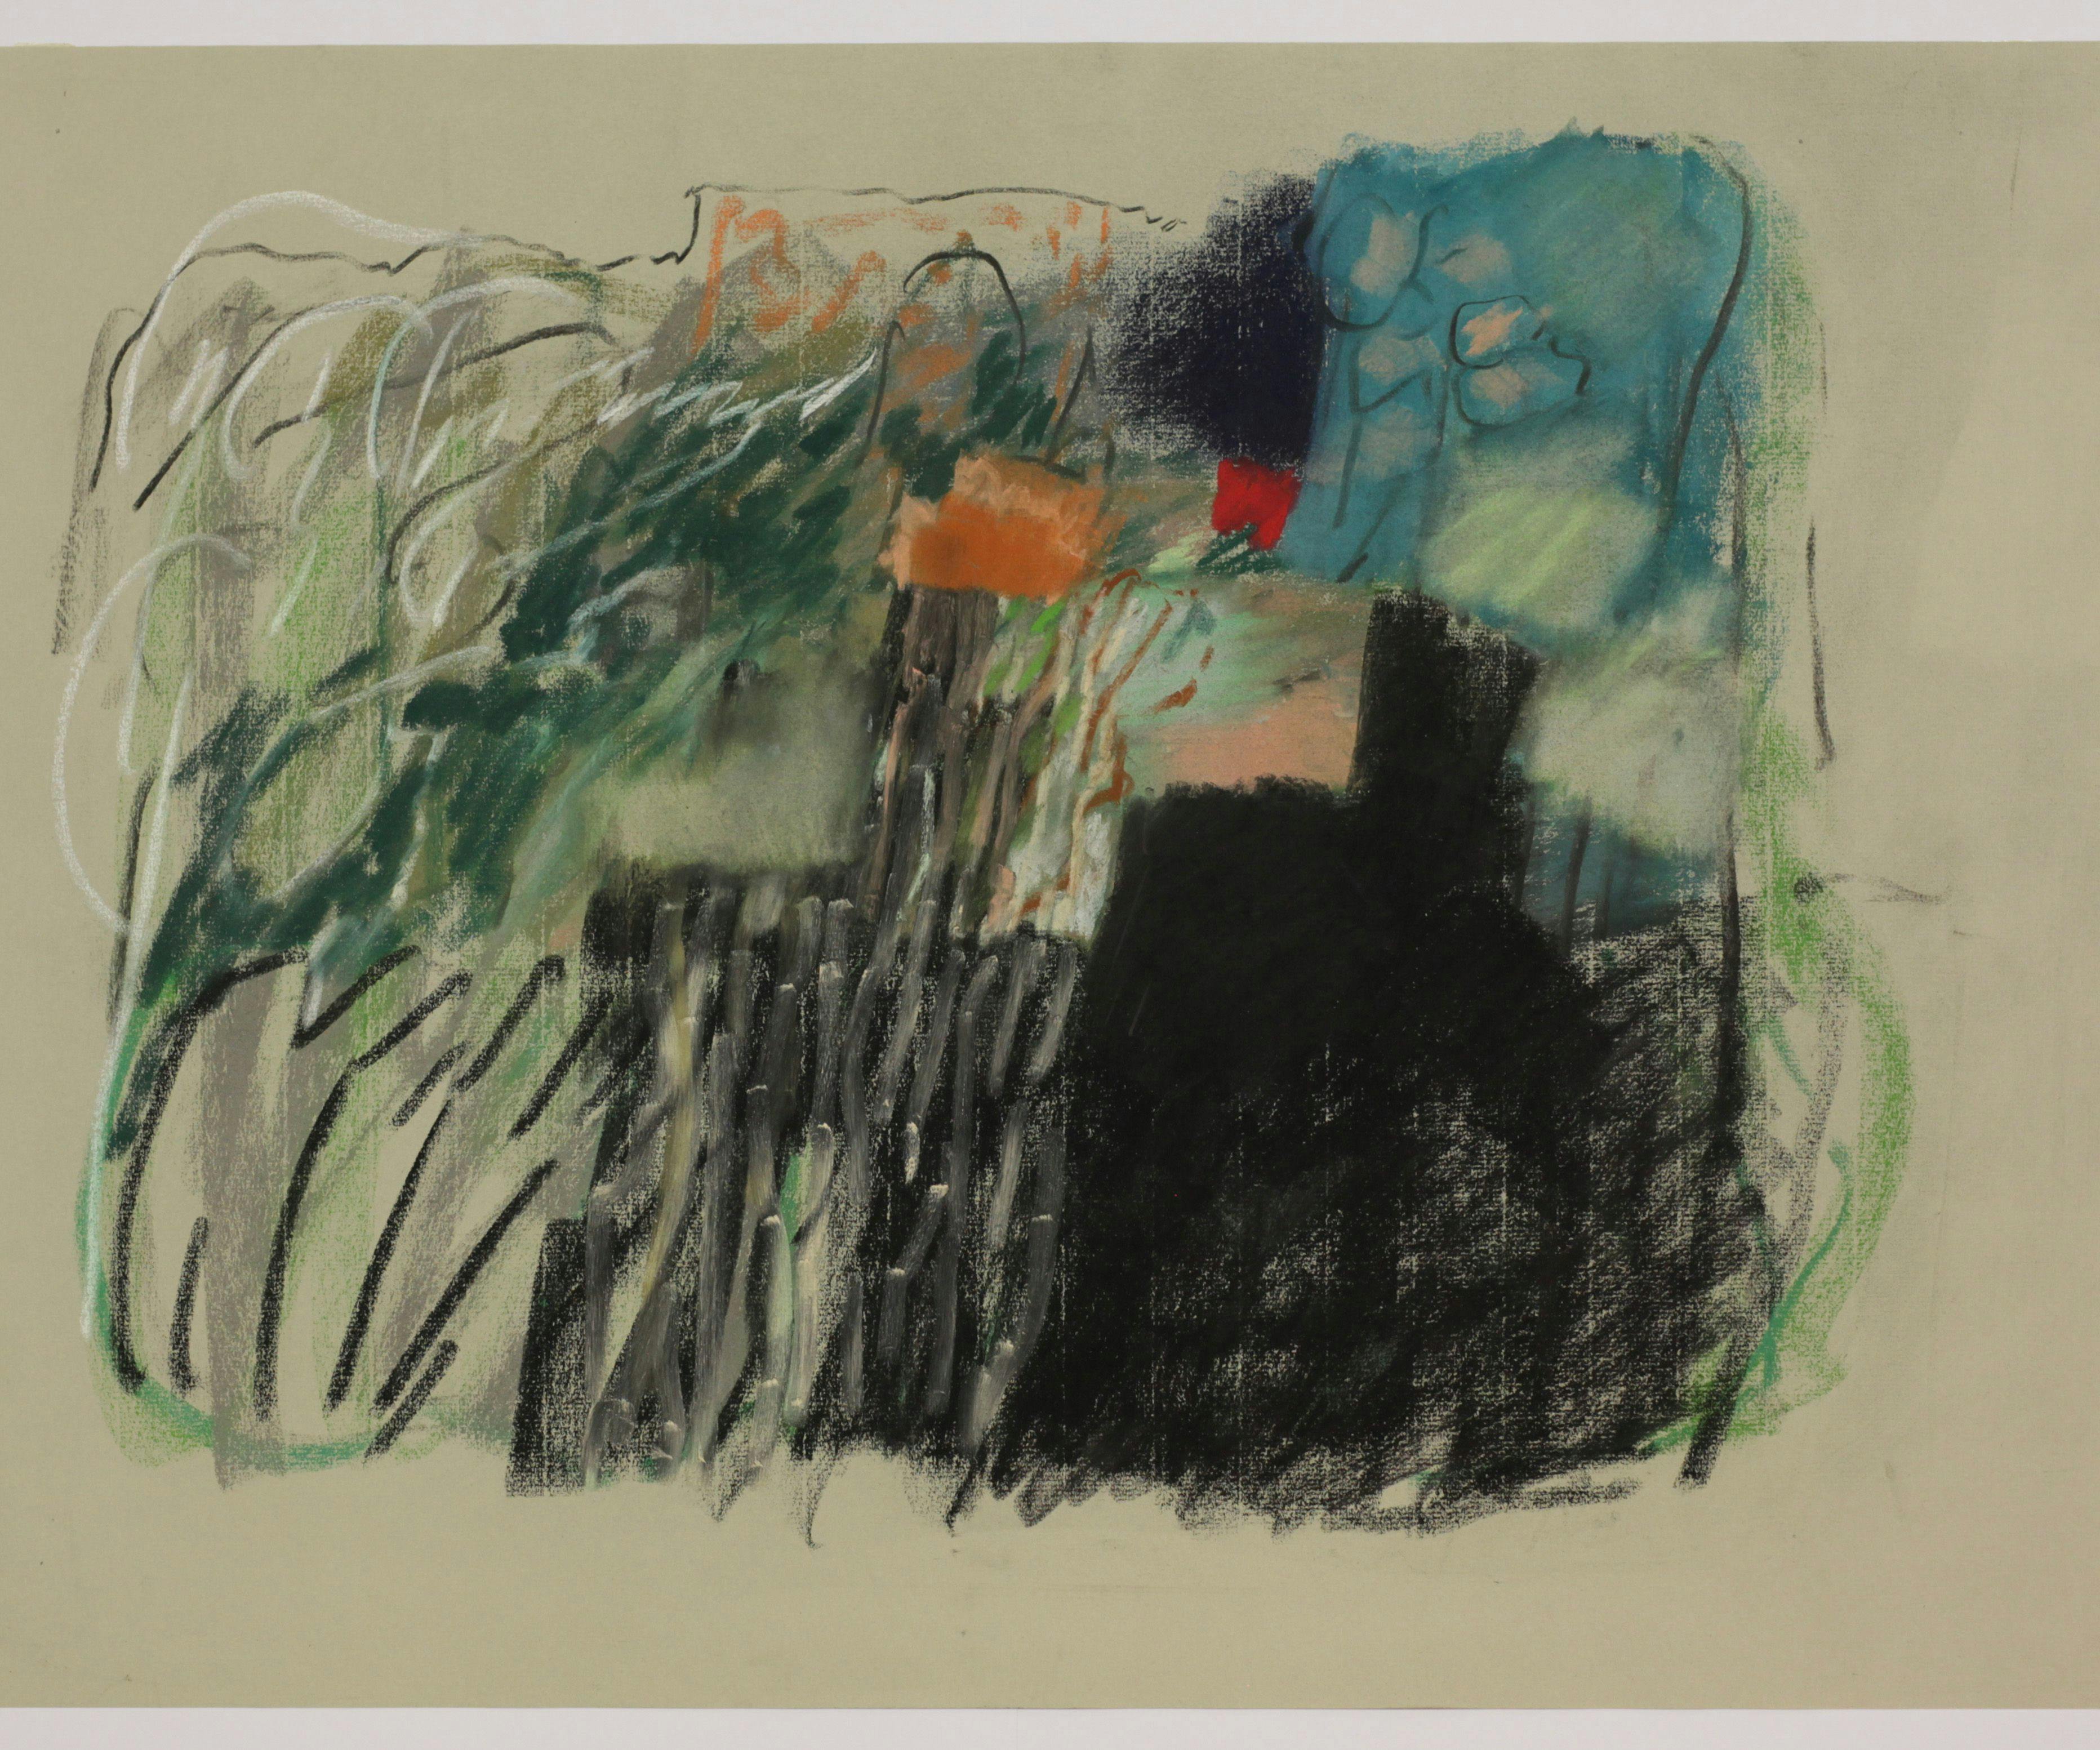 Verksfoto: Aase Gulbrandsen, 'Grini' (1972), pastell på papir, papir, 50 x 65 cm